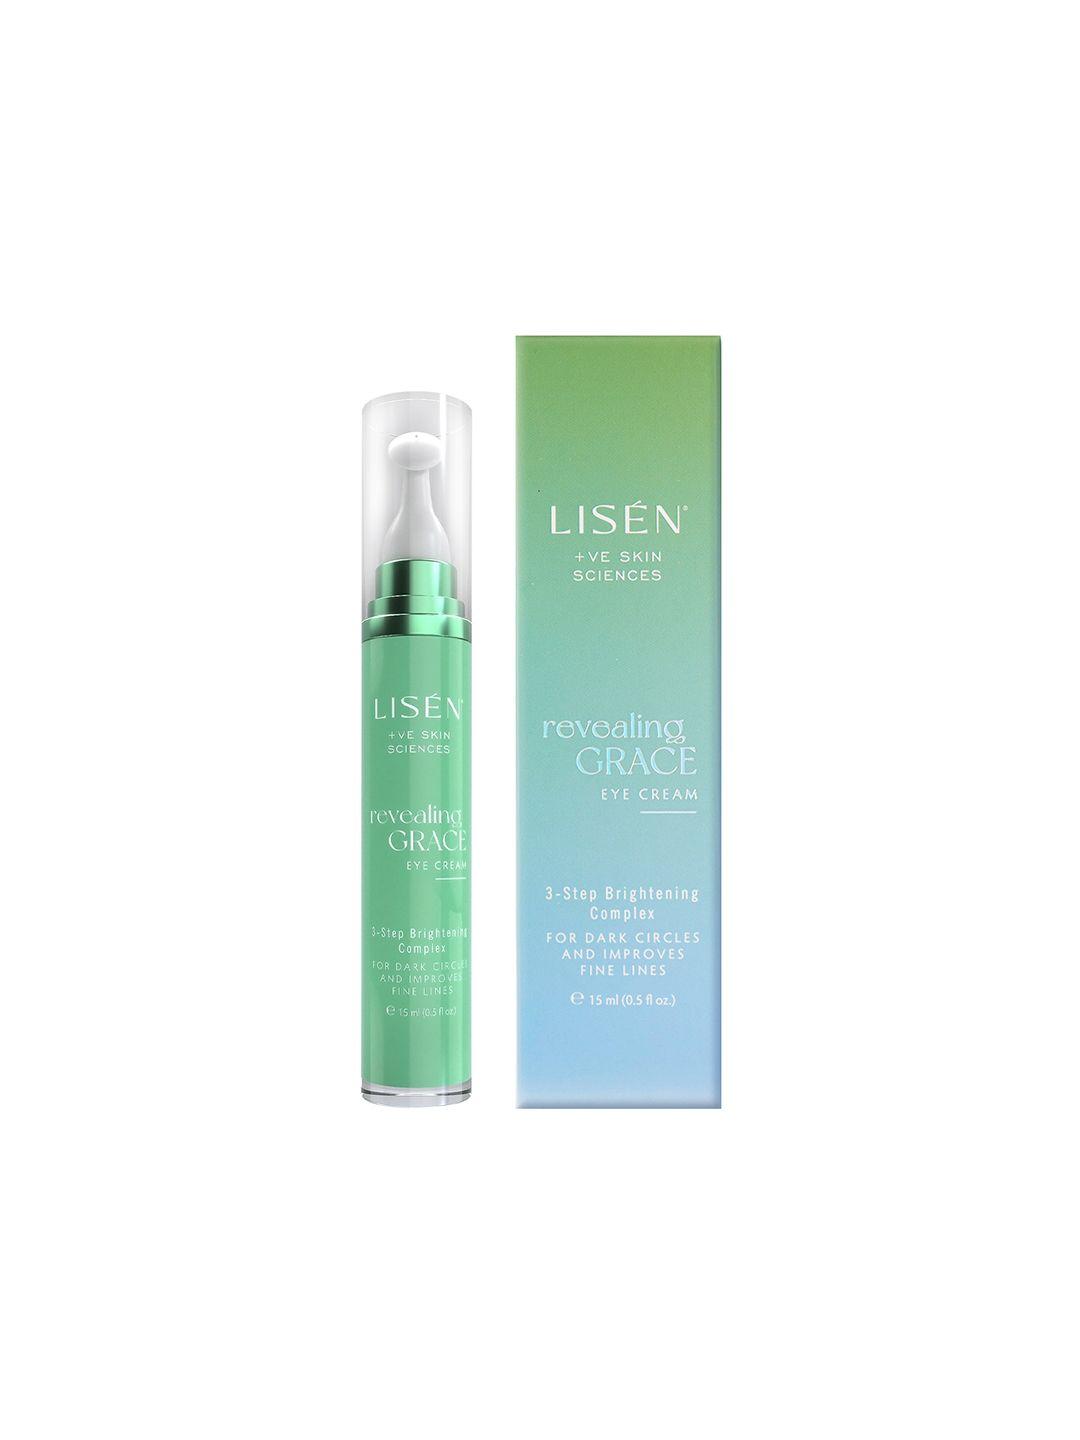 lisen-revealing-grace-eye-cream-to-reduce-dark-circles-puffiness-fine-lines-&-wrinkles15ml